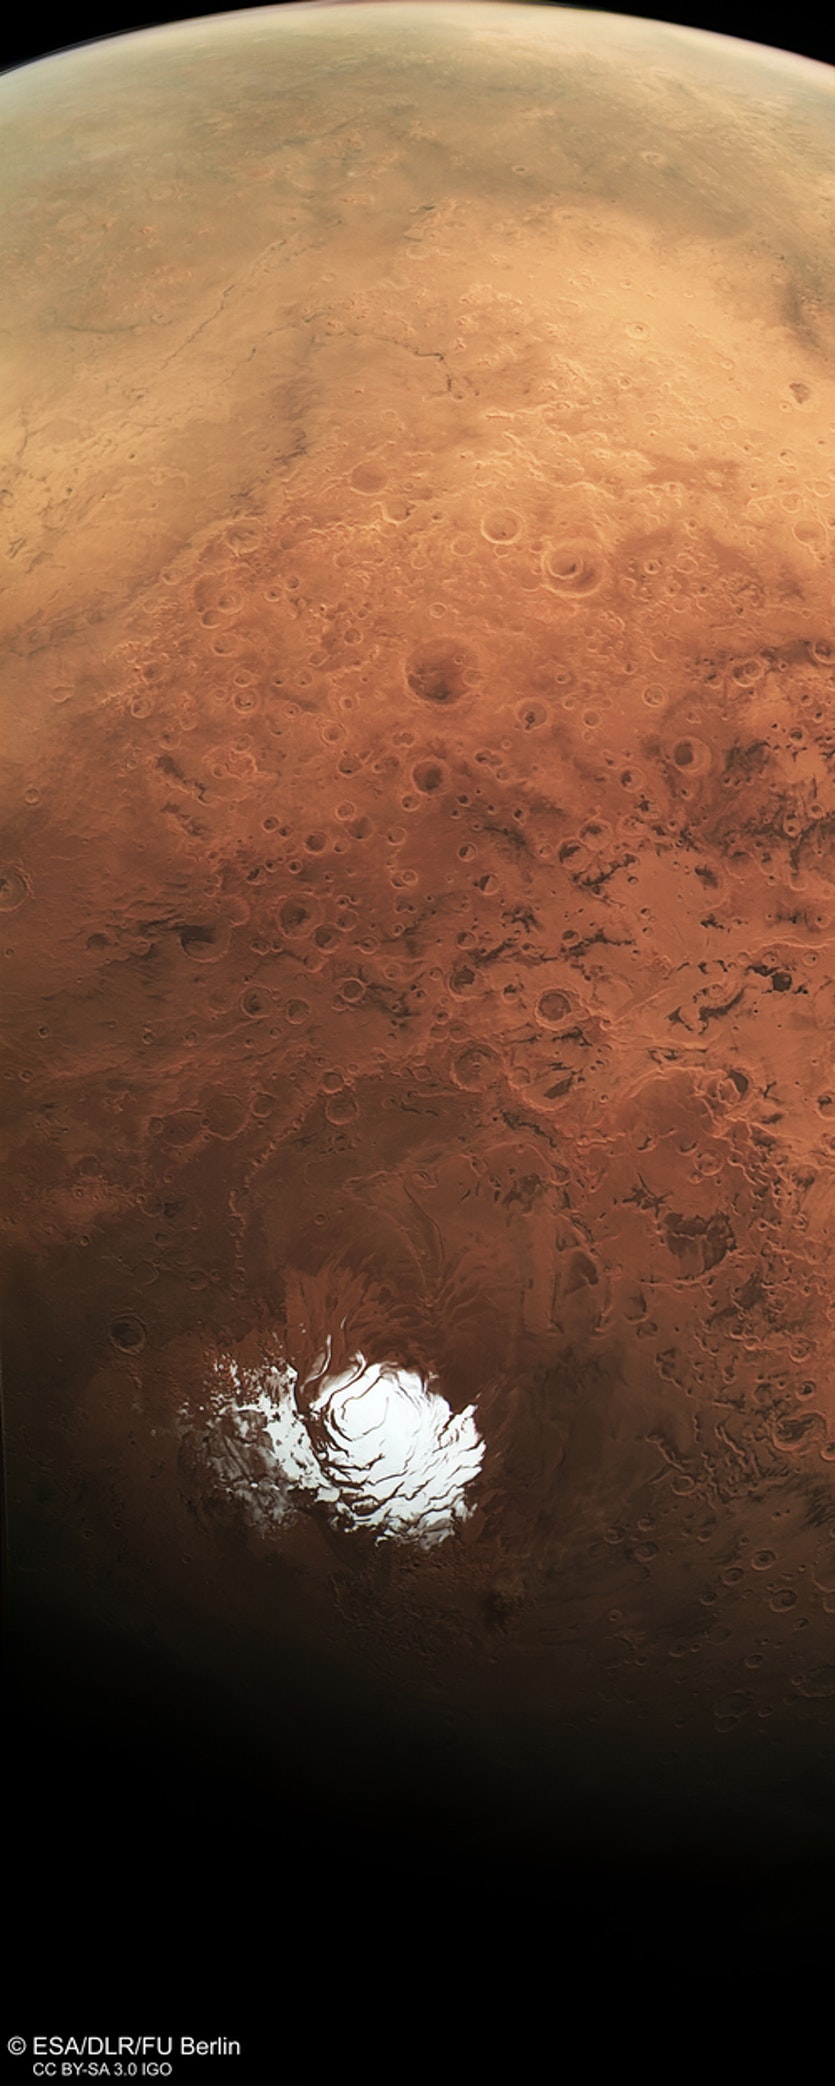 Mars south pole and beyond